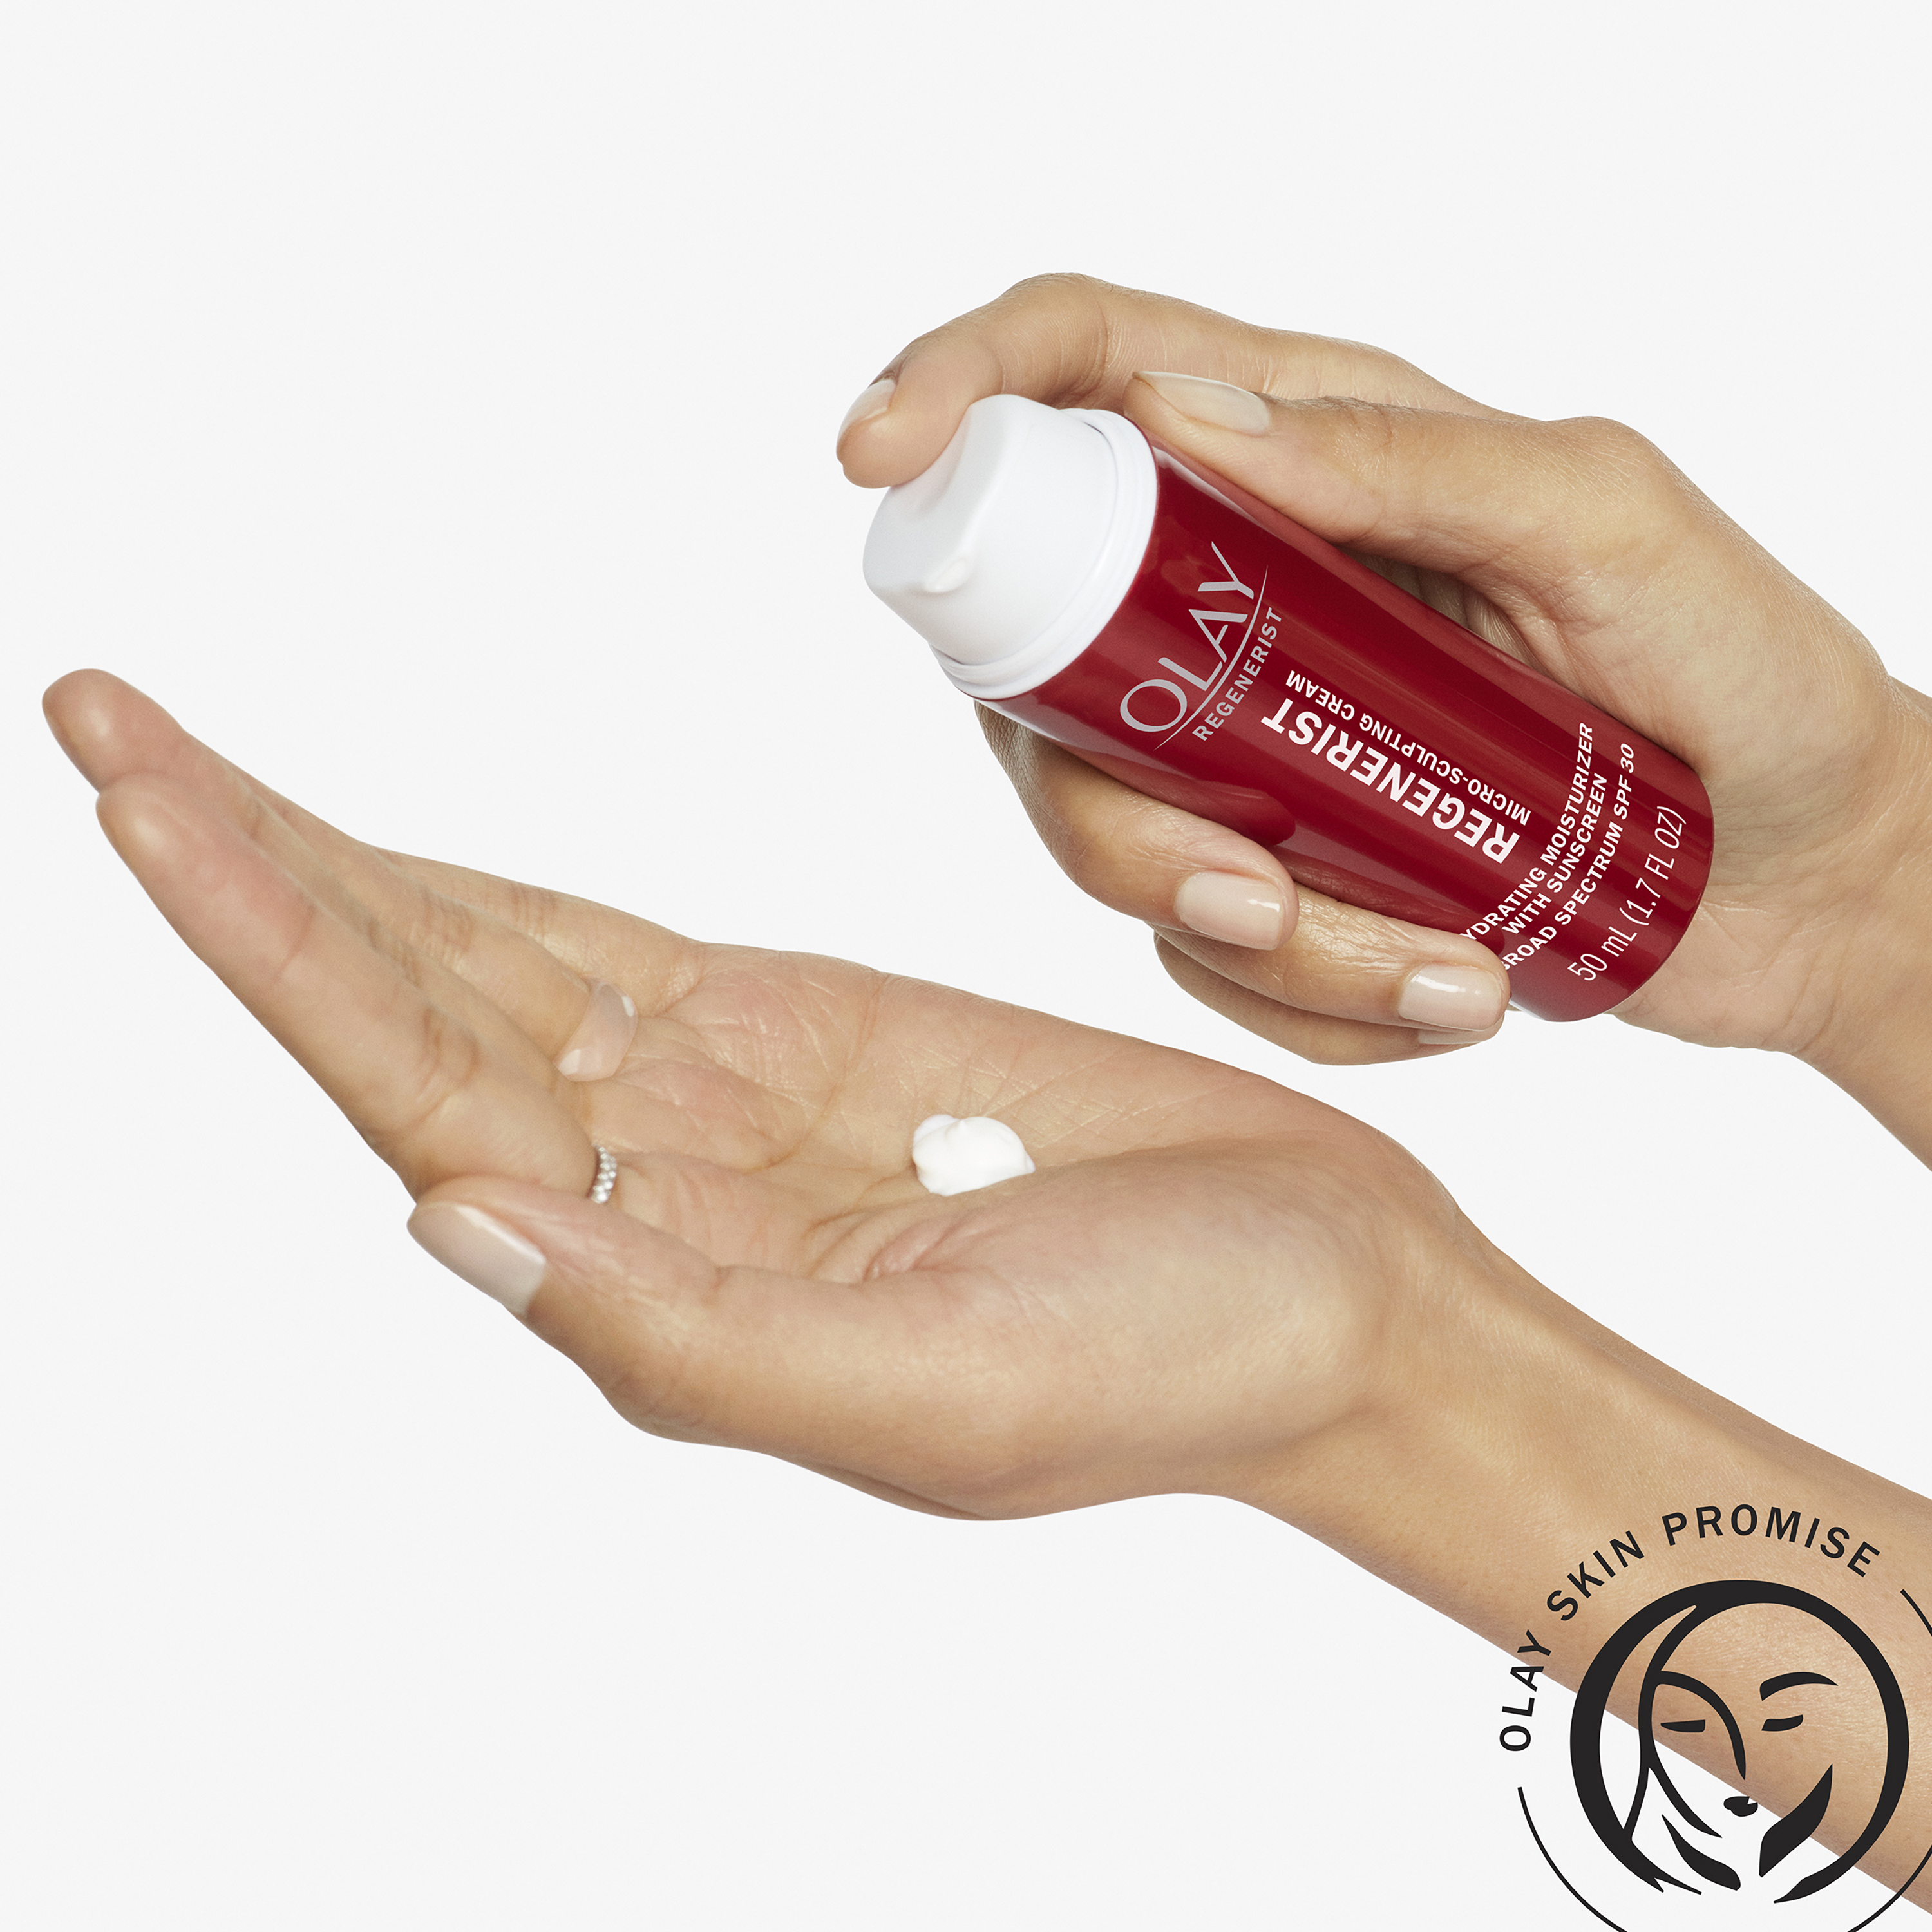 Olay Regenerist Micro-Sculpting Cream Moisturizer, SPF 30 Sun Protection for All Skin Types, 1.7 oz - image 5 of 11